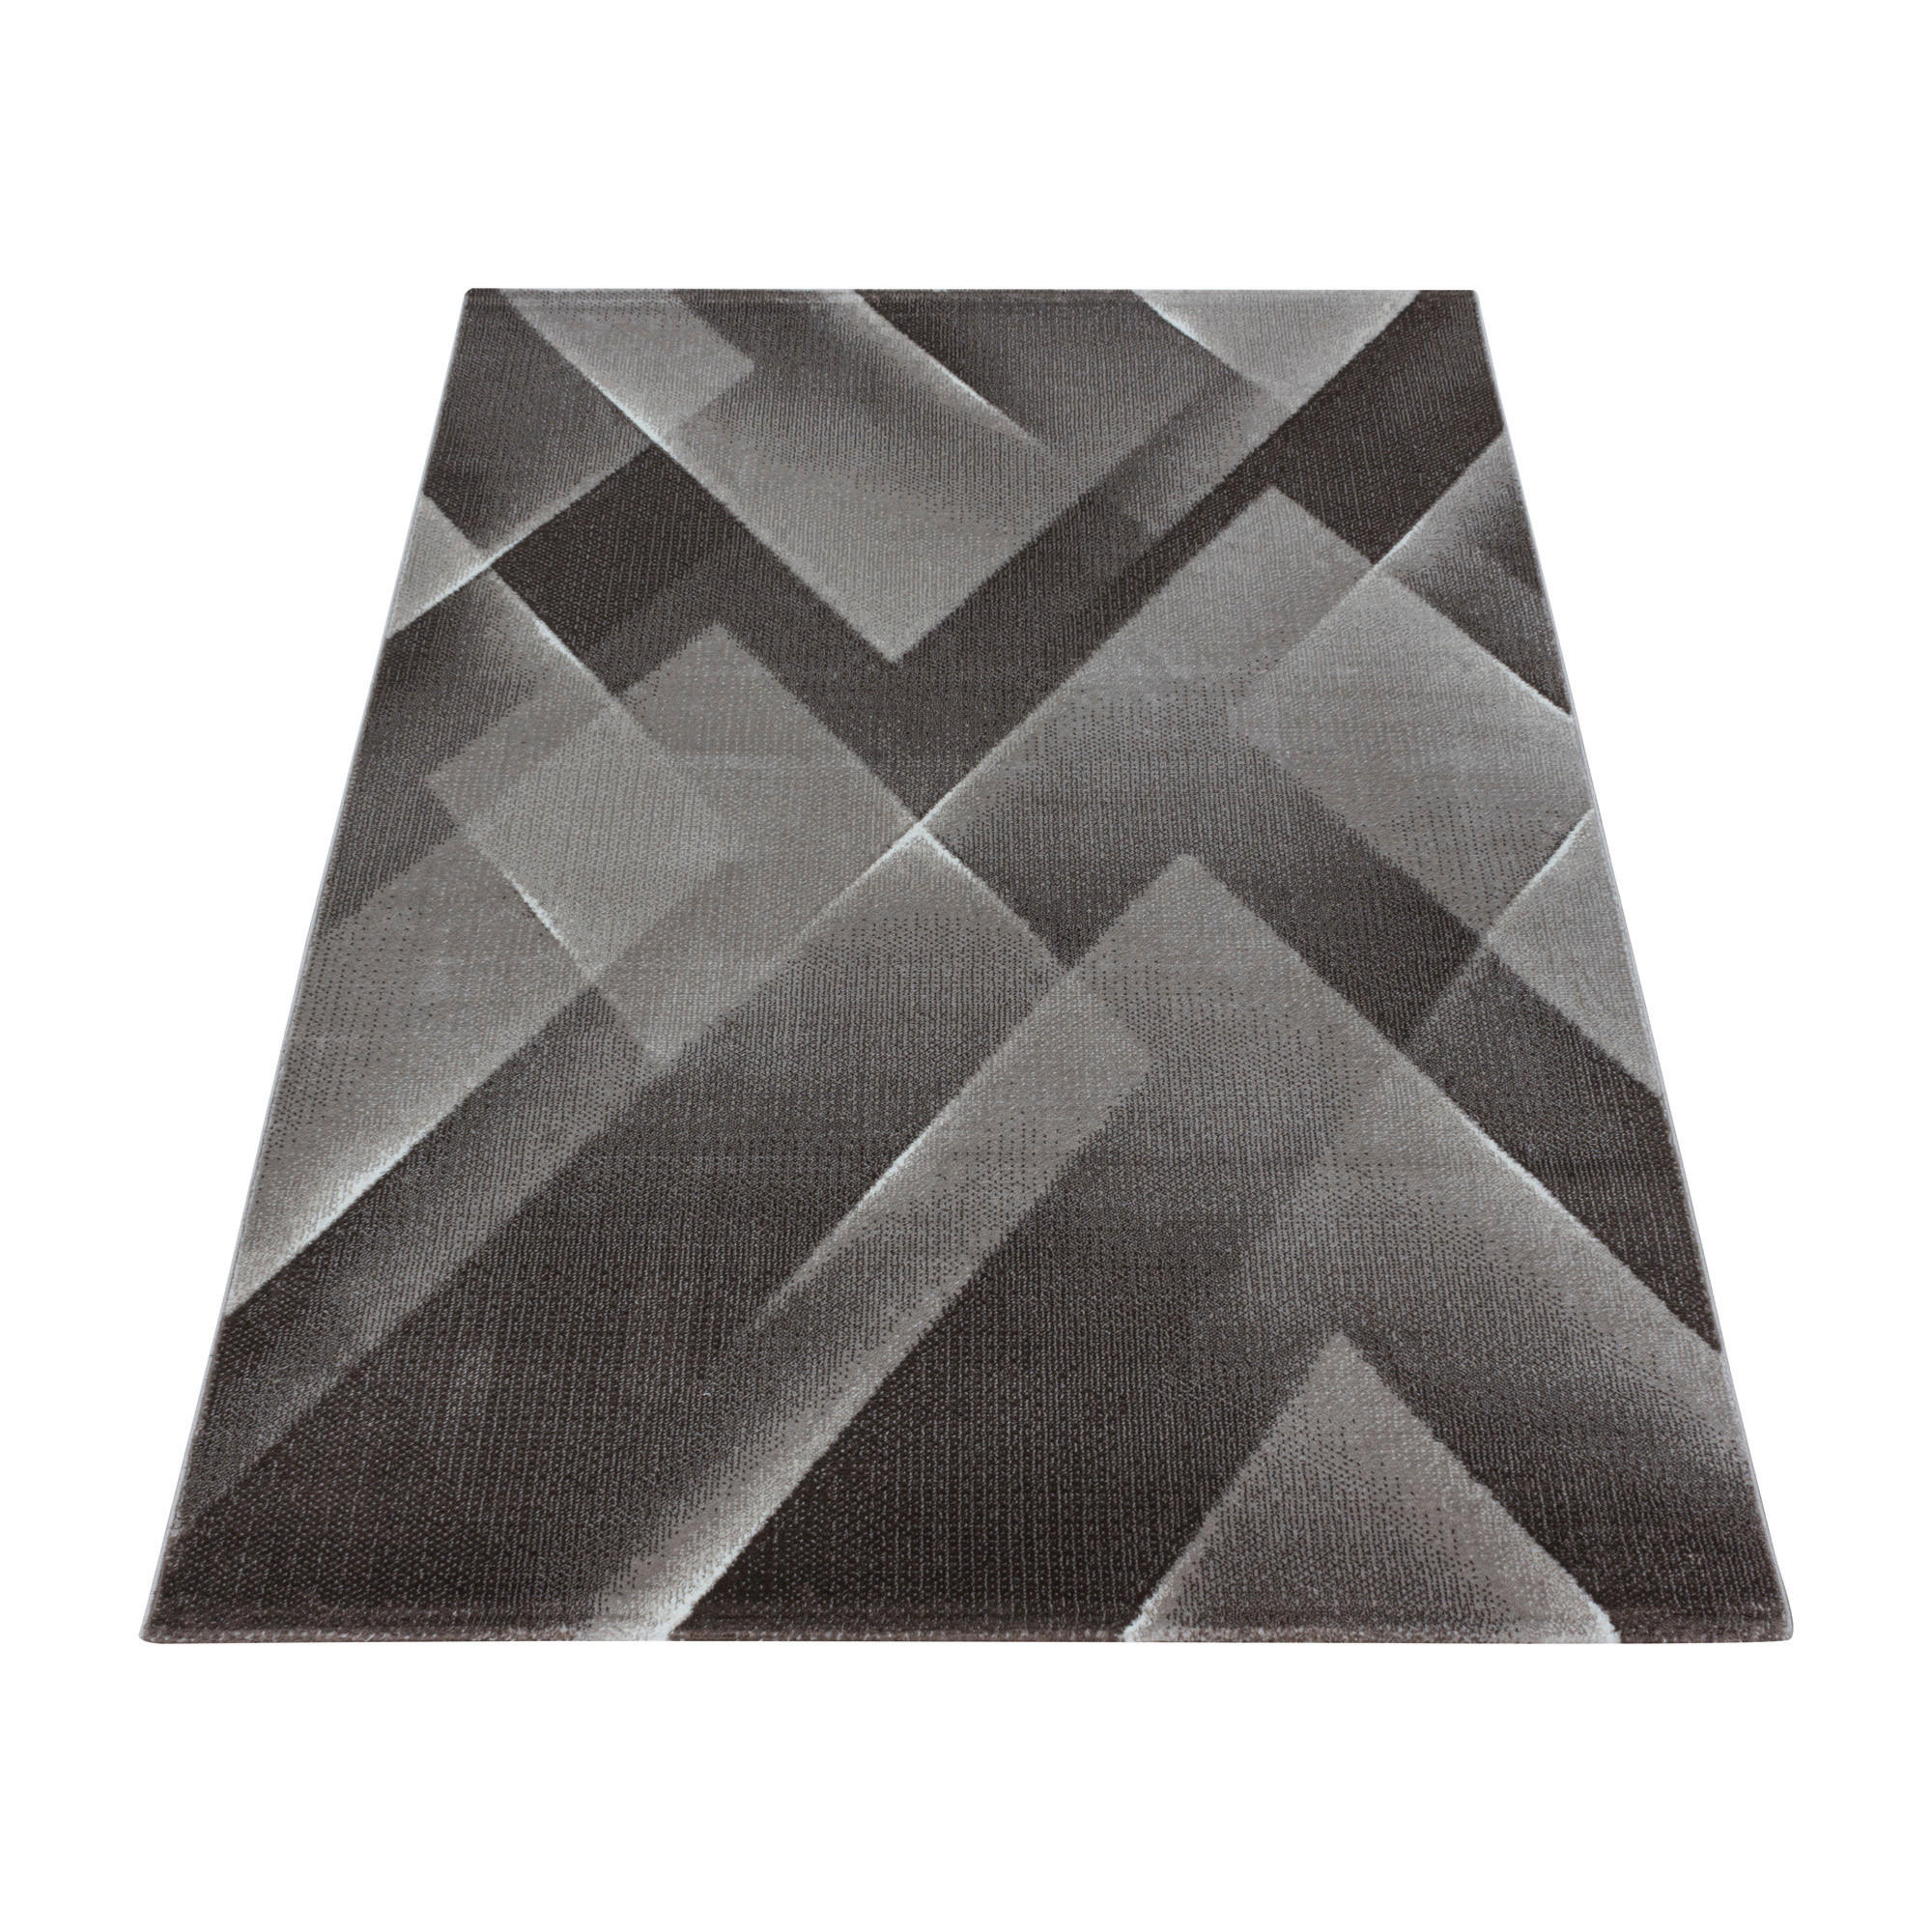 WEBTEPPICH  160/230 cm  Braun   - Braun, Design, Textil (160/230cm) - Novel